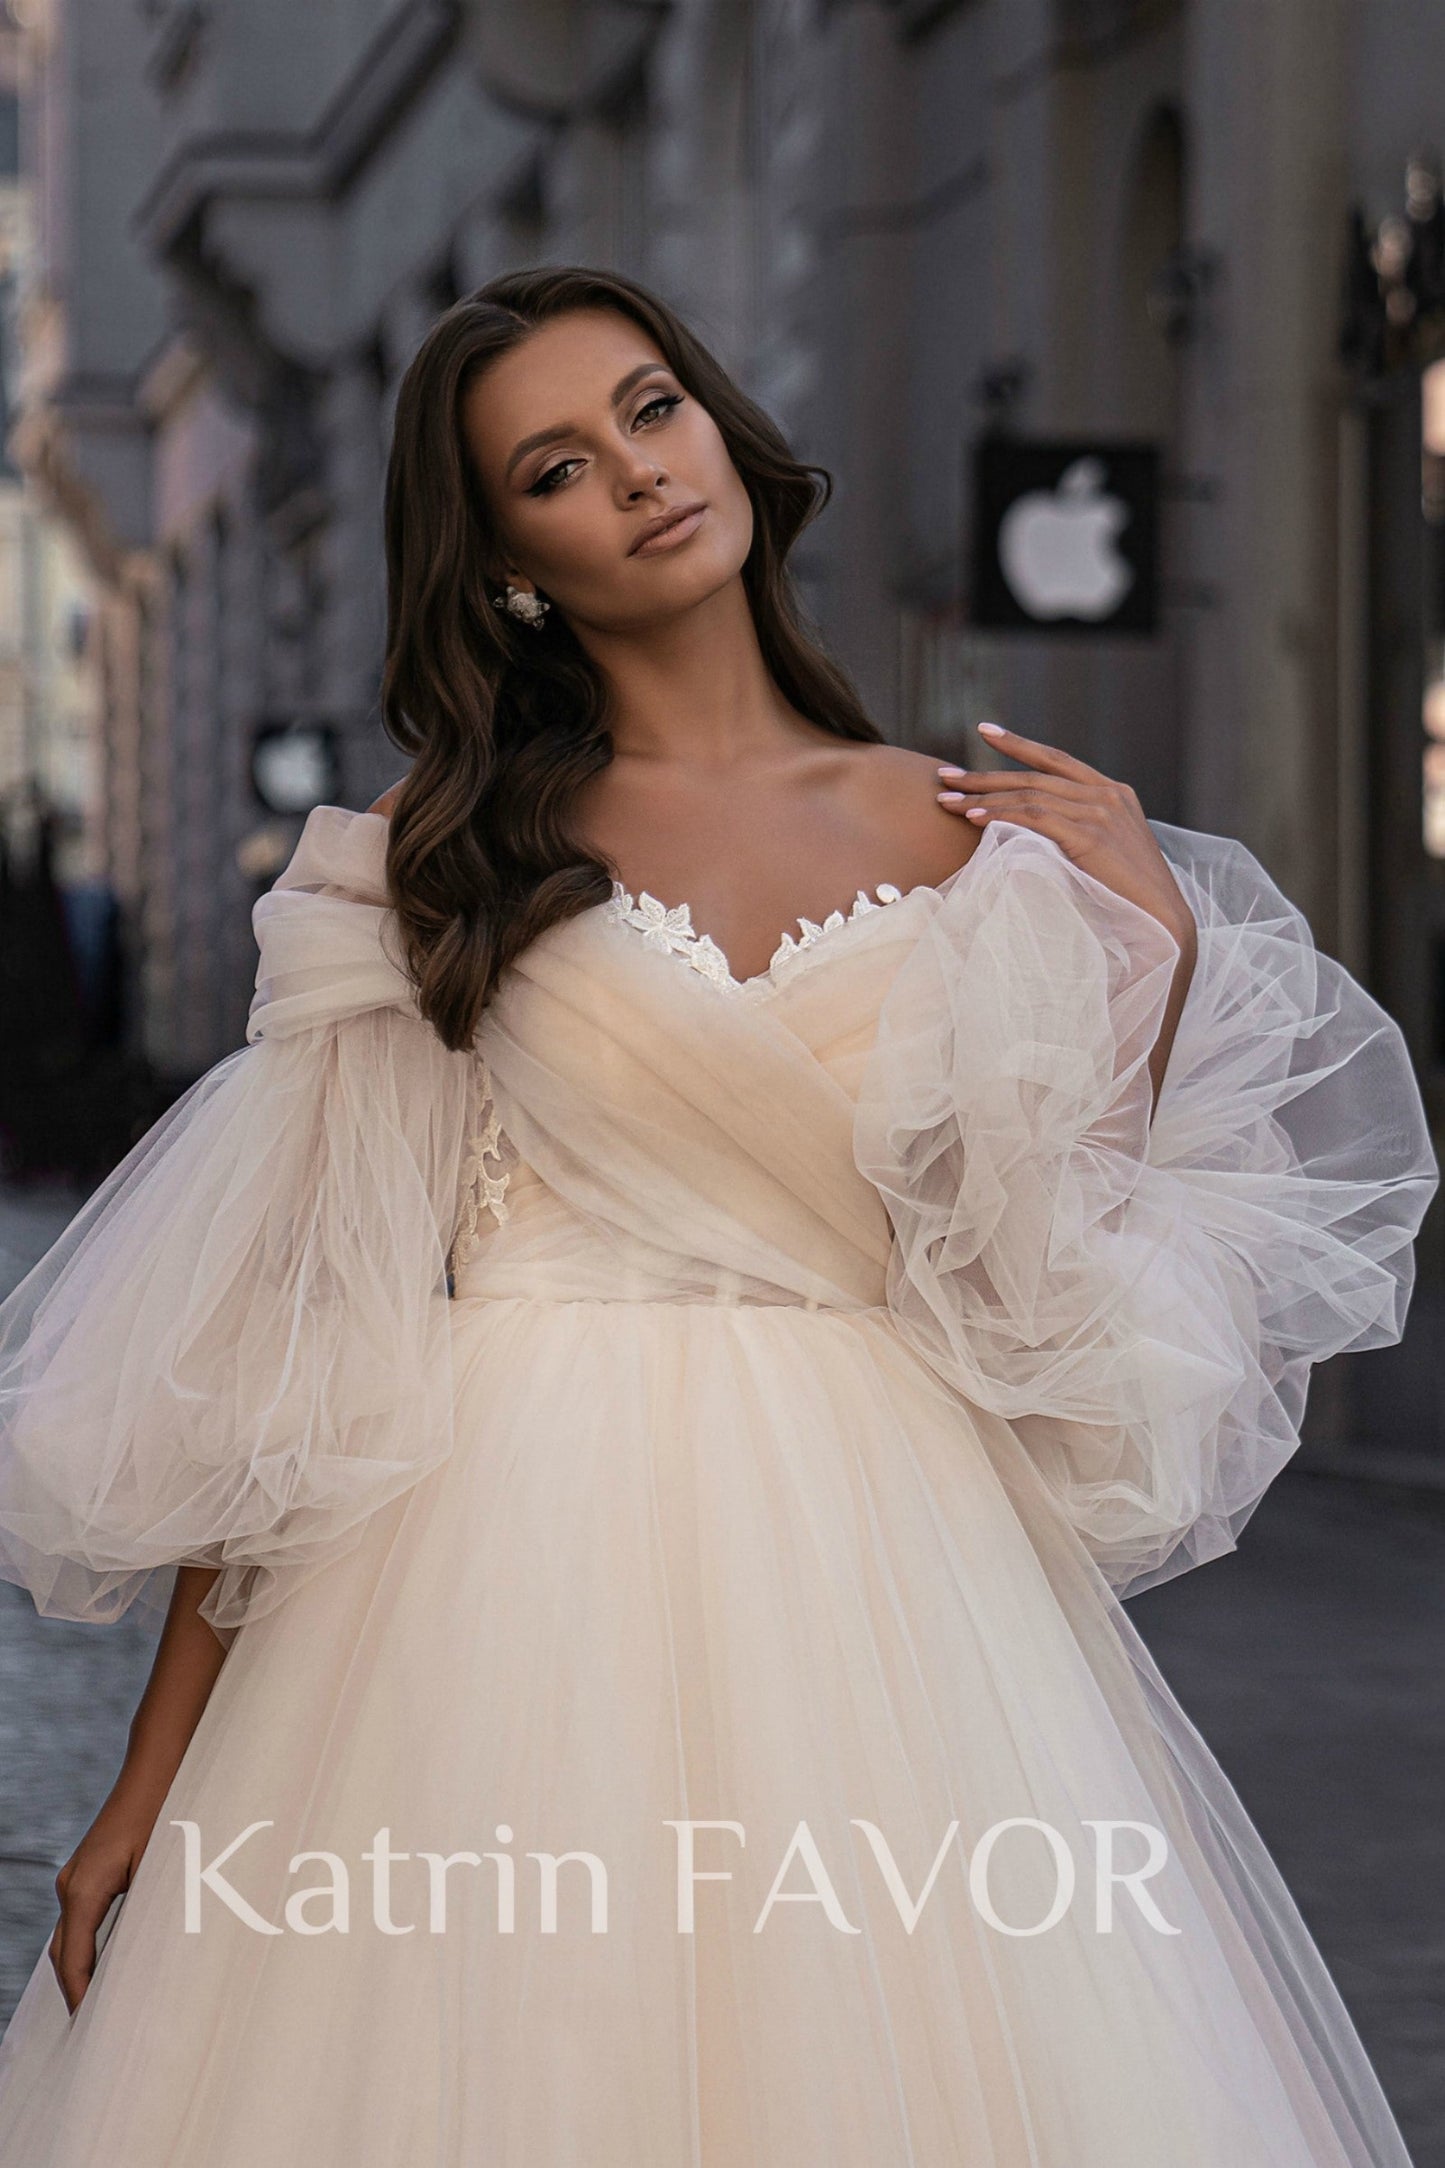 KatrinFAVORboutique-Blush tulle fairytale wedding dress